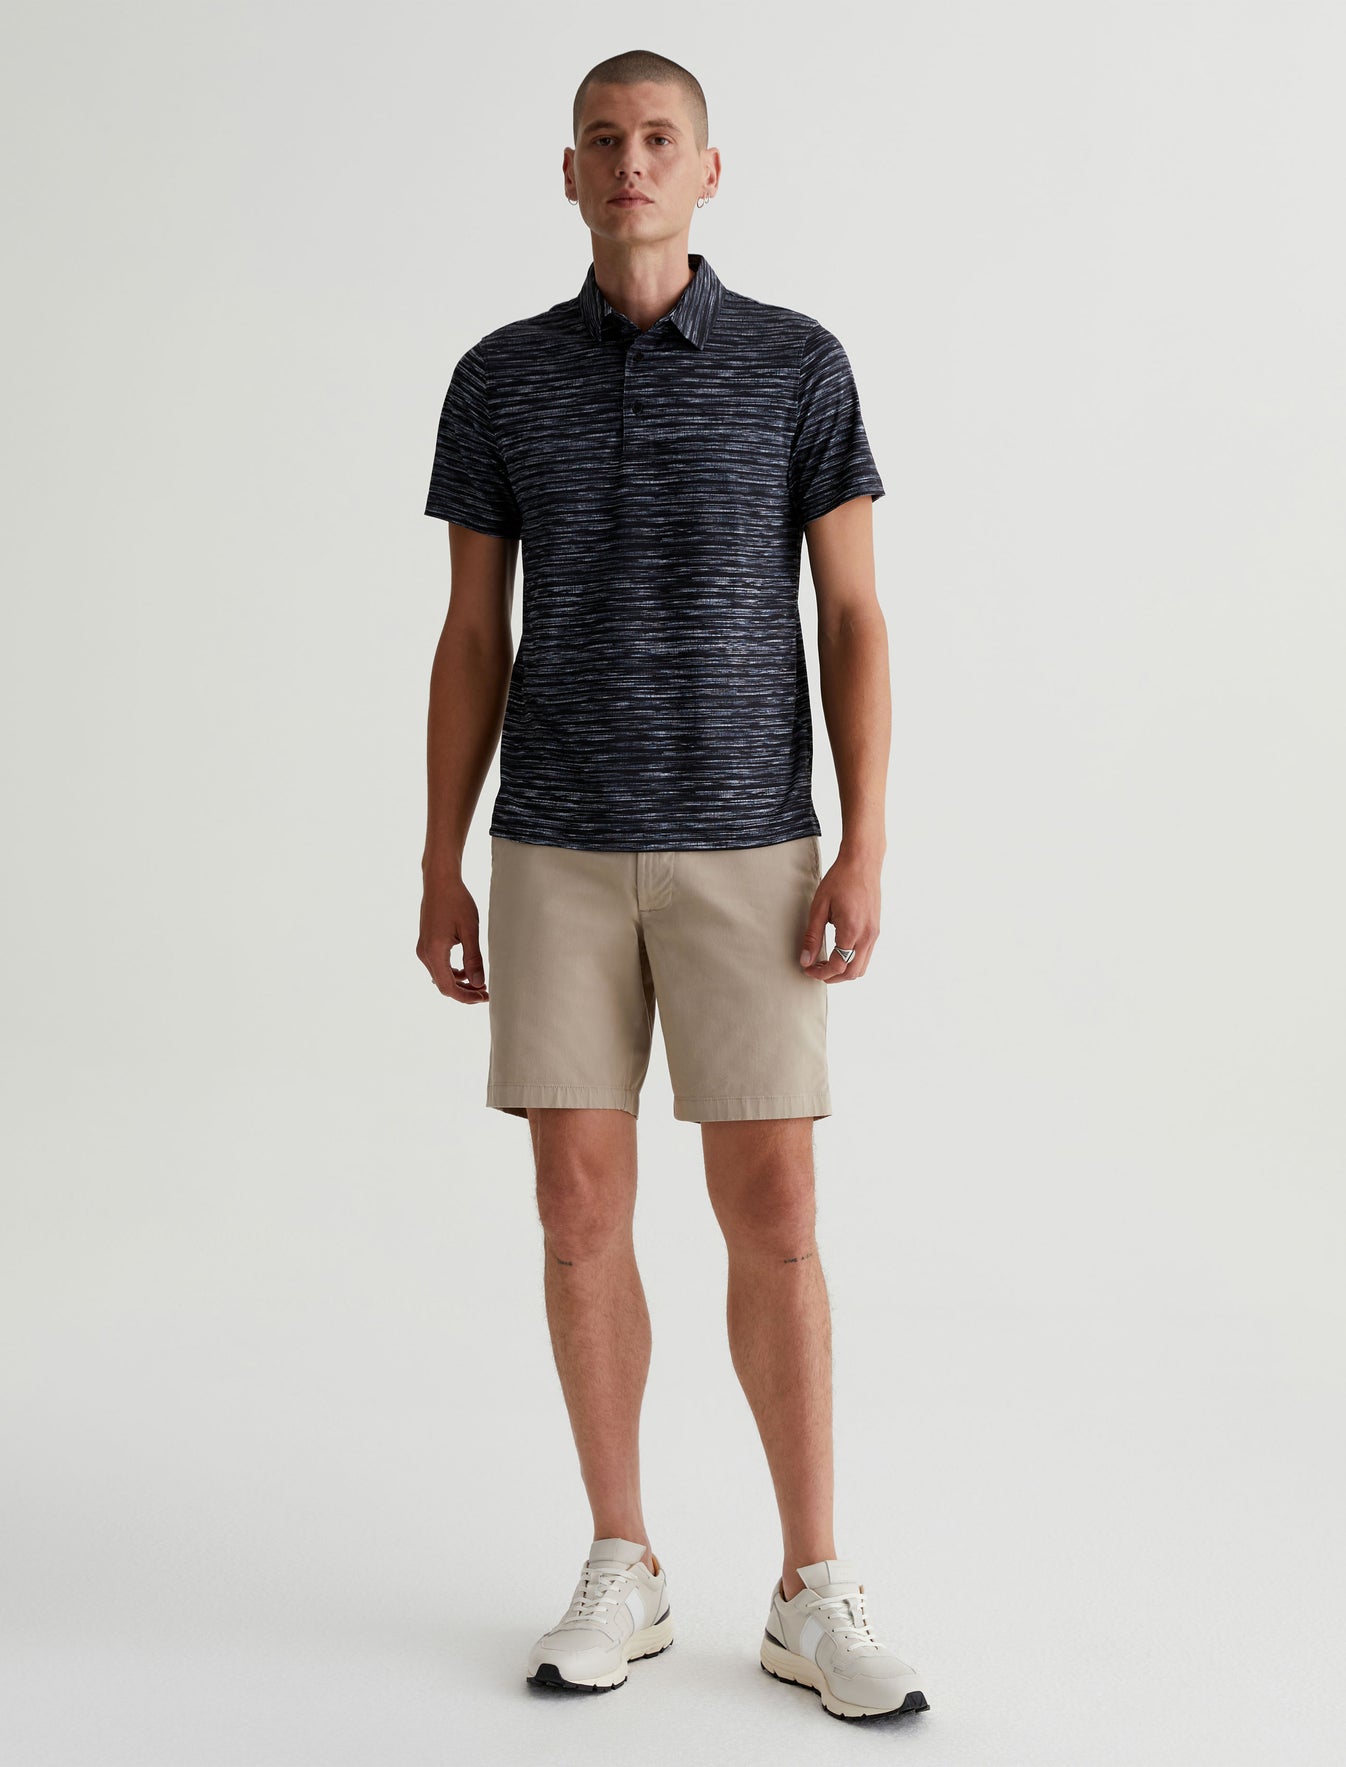 Bryce S/S Polo Slub Stripe Black Classic Fit Short Sleeve Polo T-Shirt Mens Top Photo 2